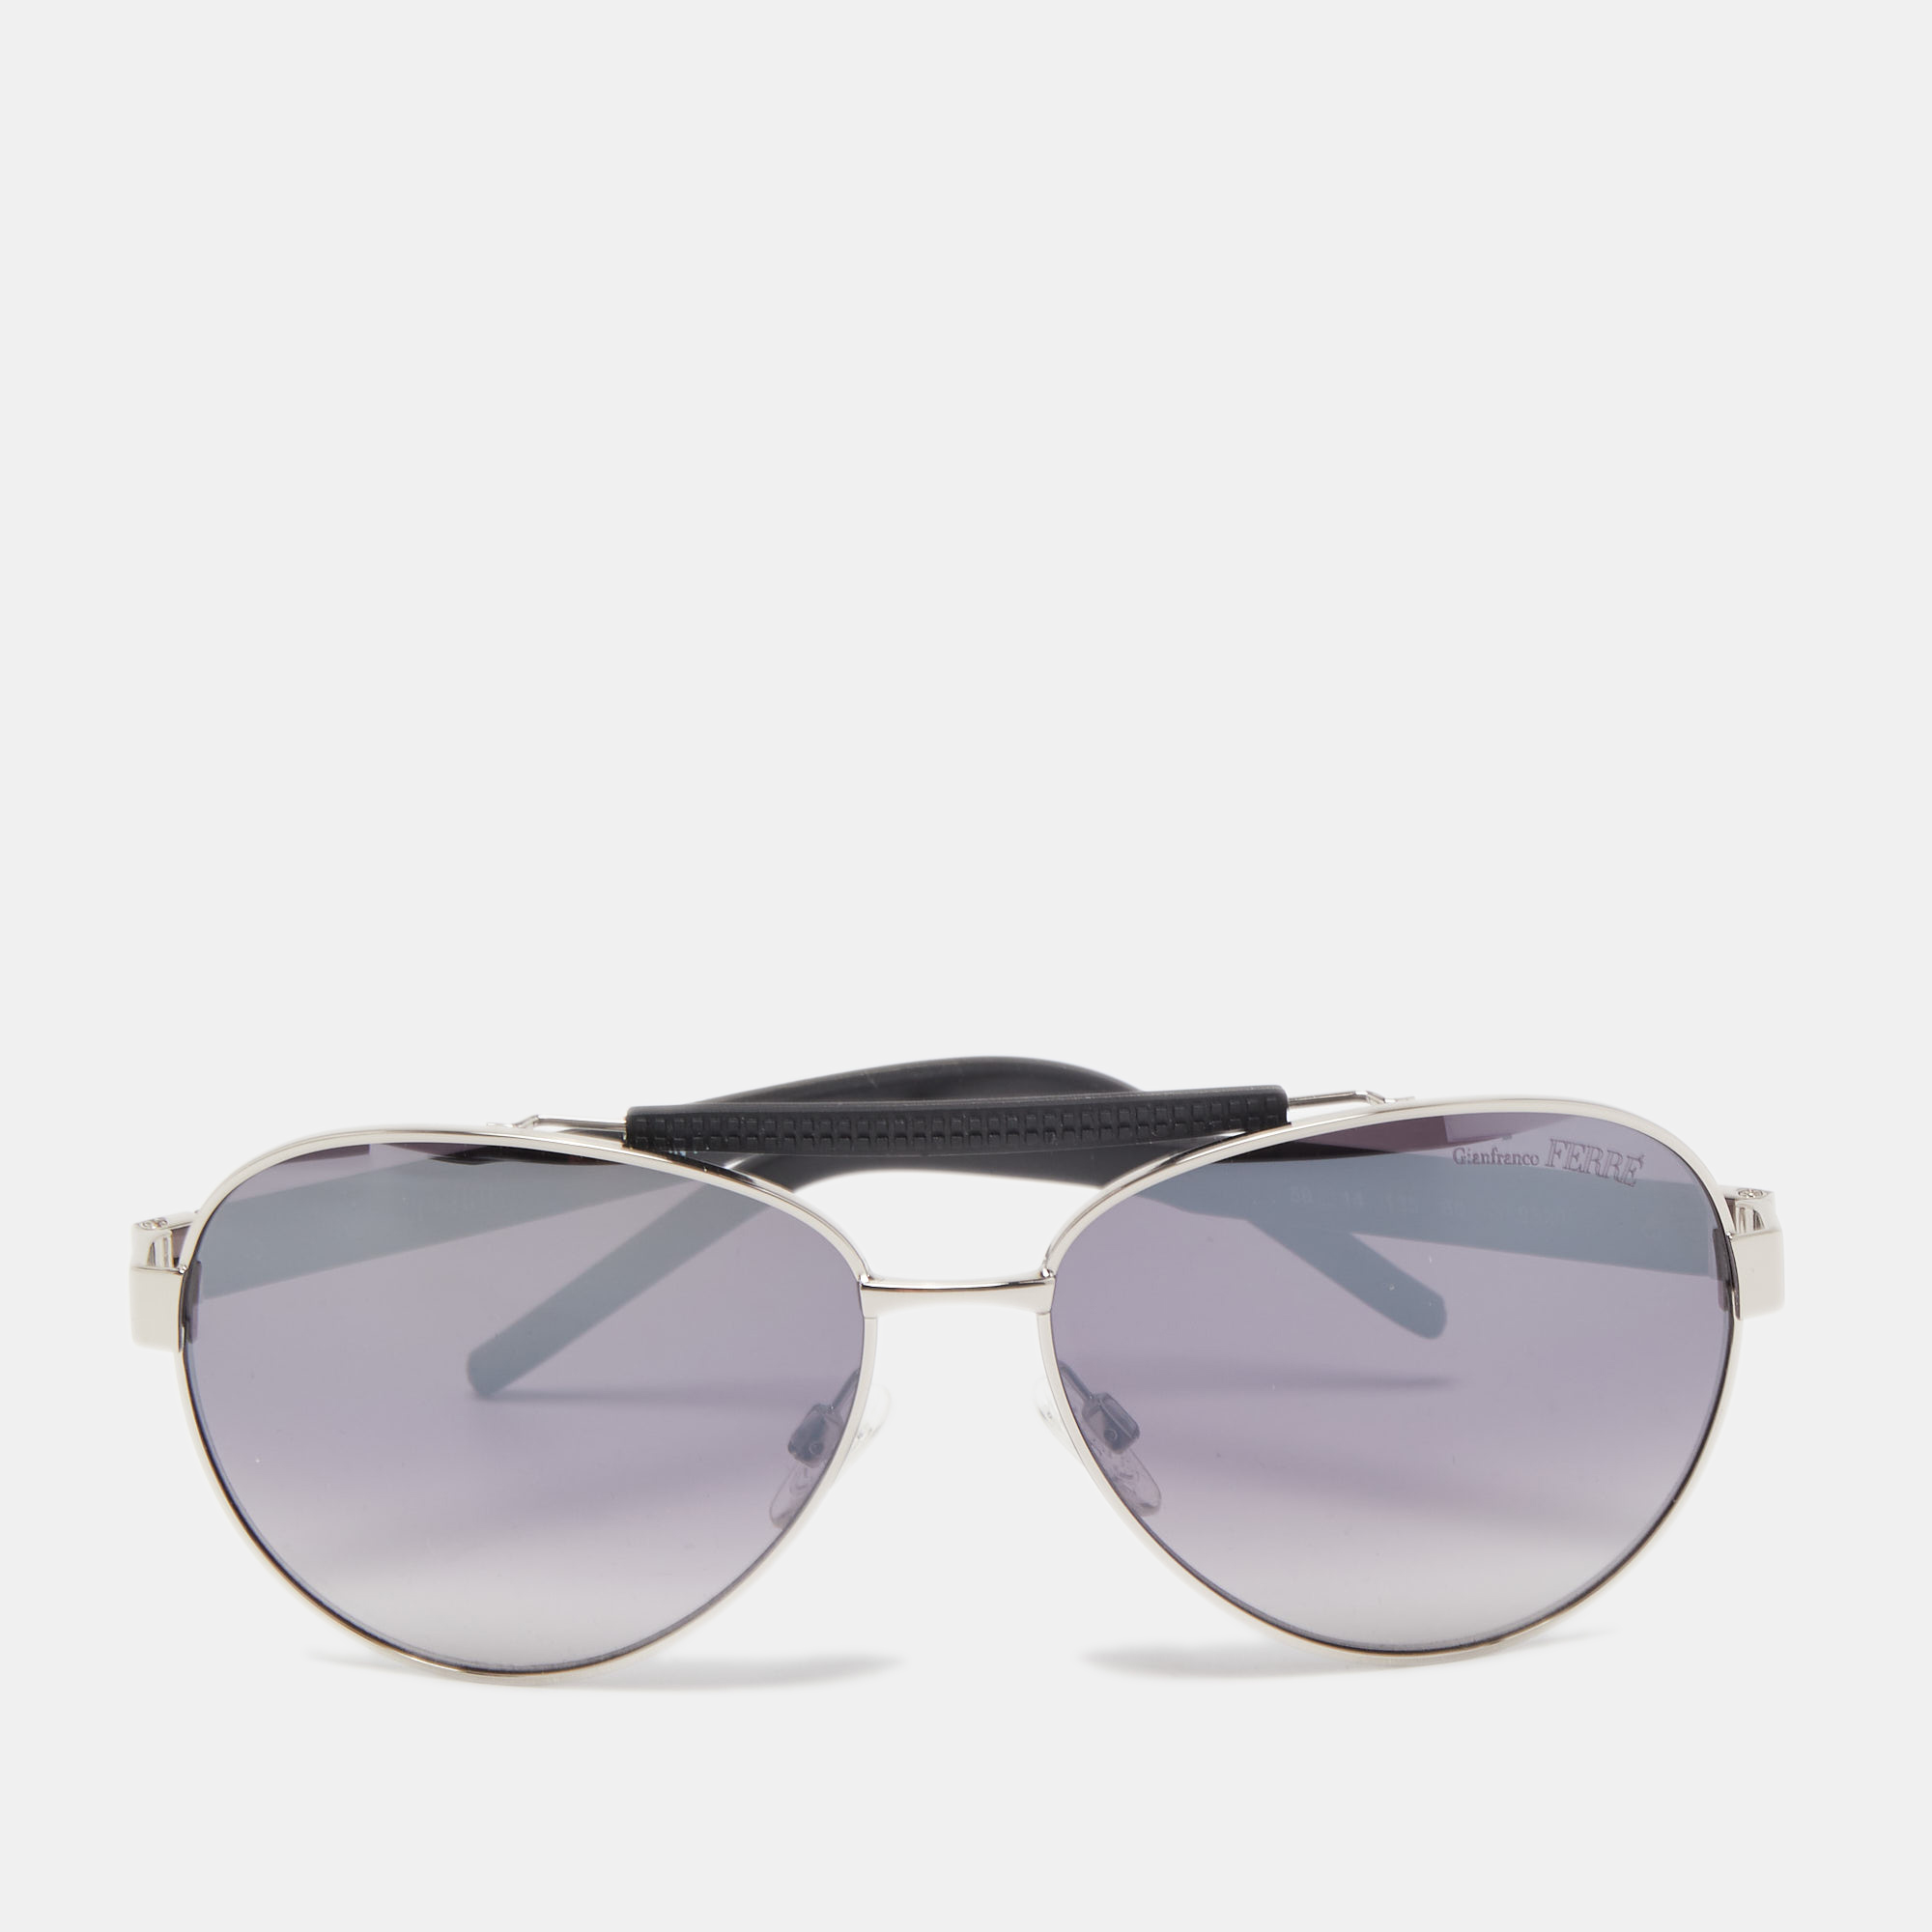 Gianfranco Ferre Black Gradient Aviator Sunglasses